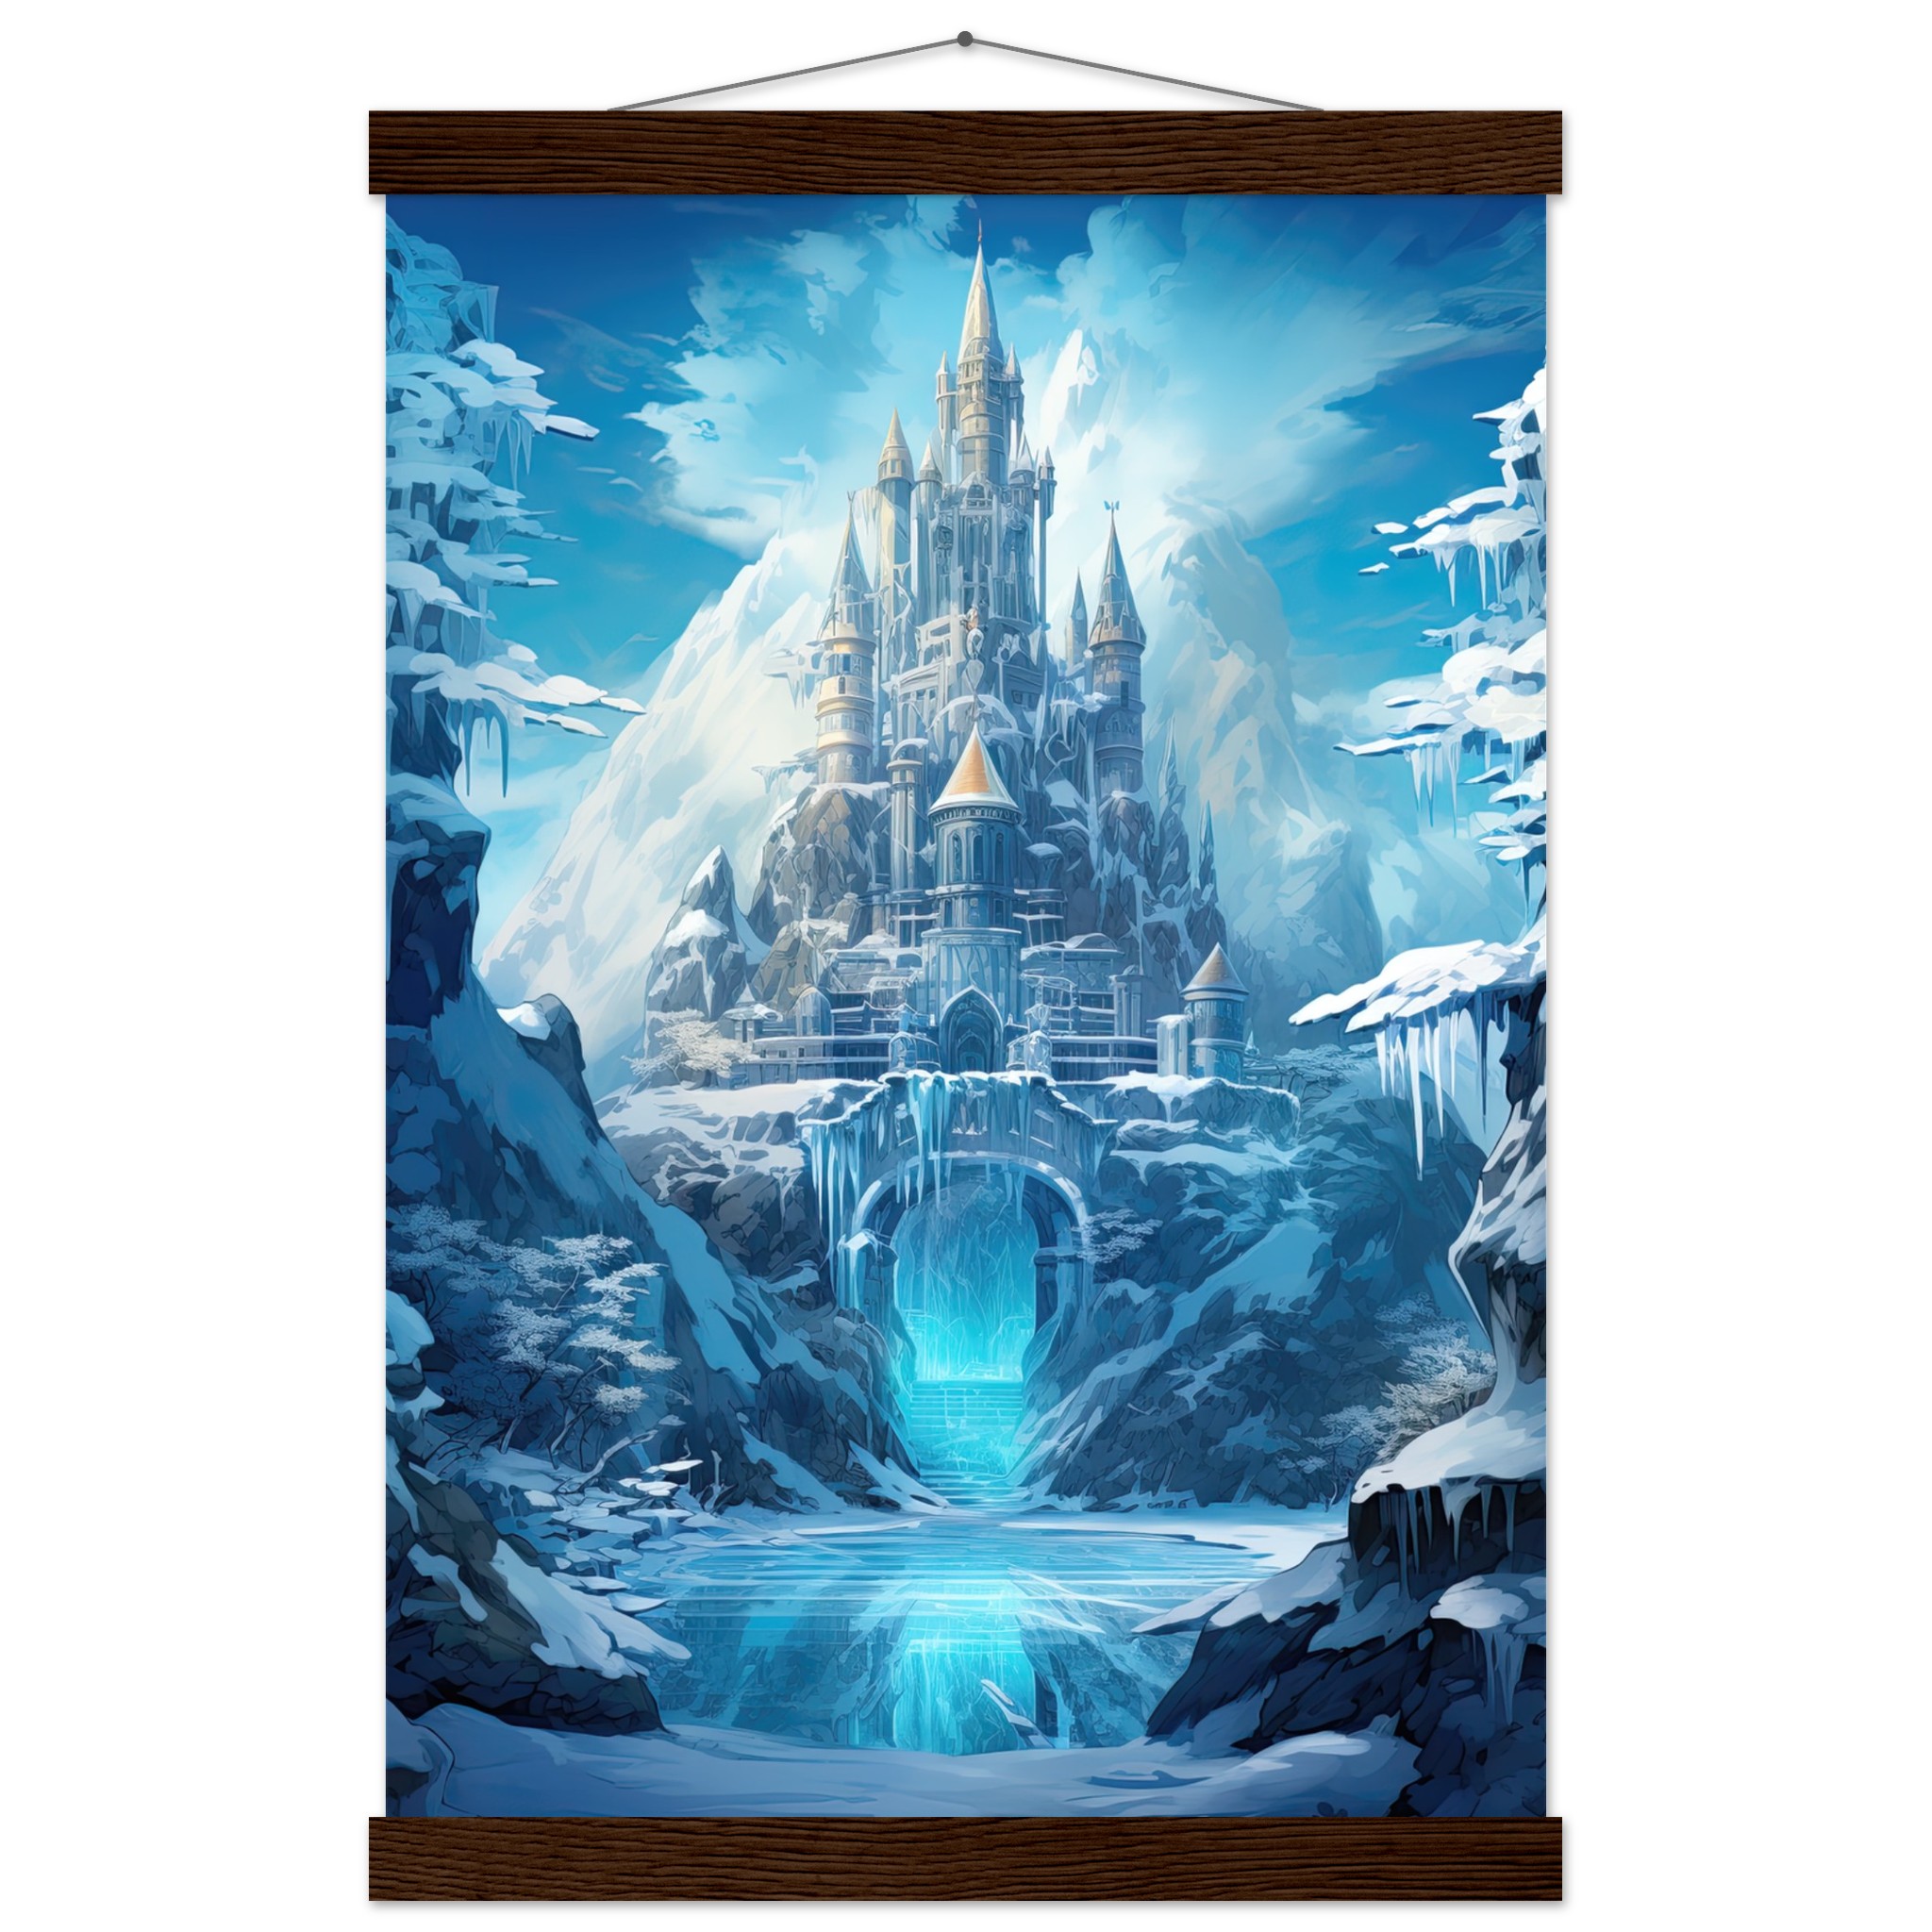 Frozen Icebound Castle Hanging Print – 30×45 cm / 12×18″, Dark wood wall hanger